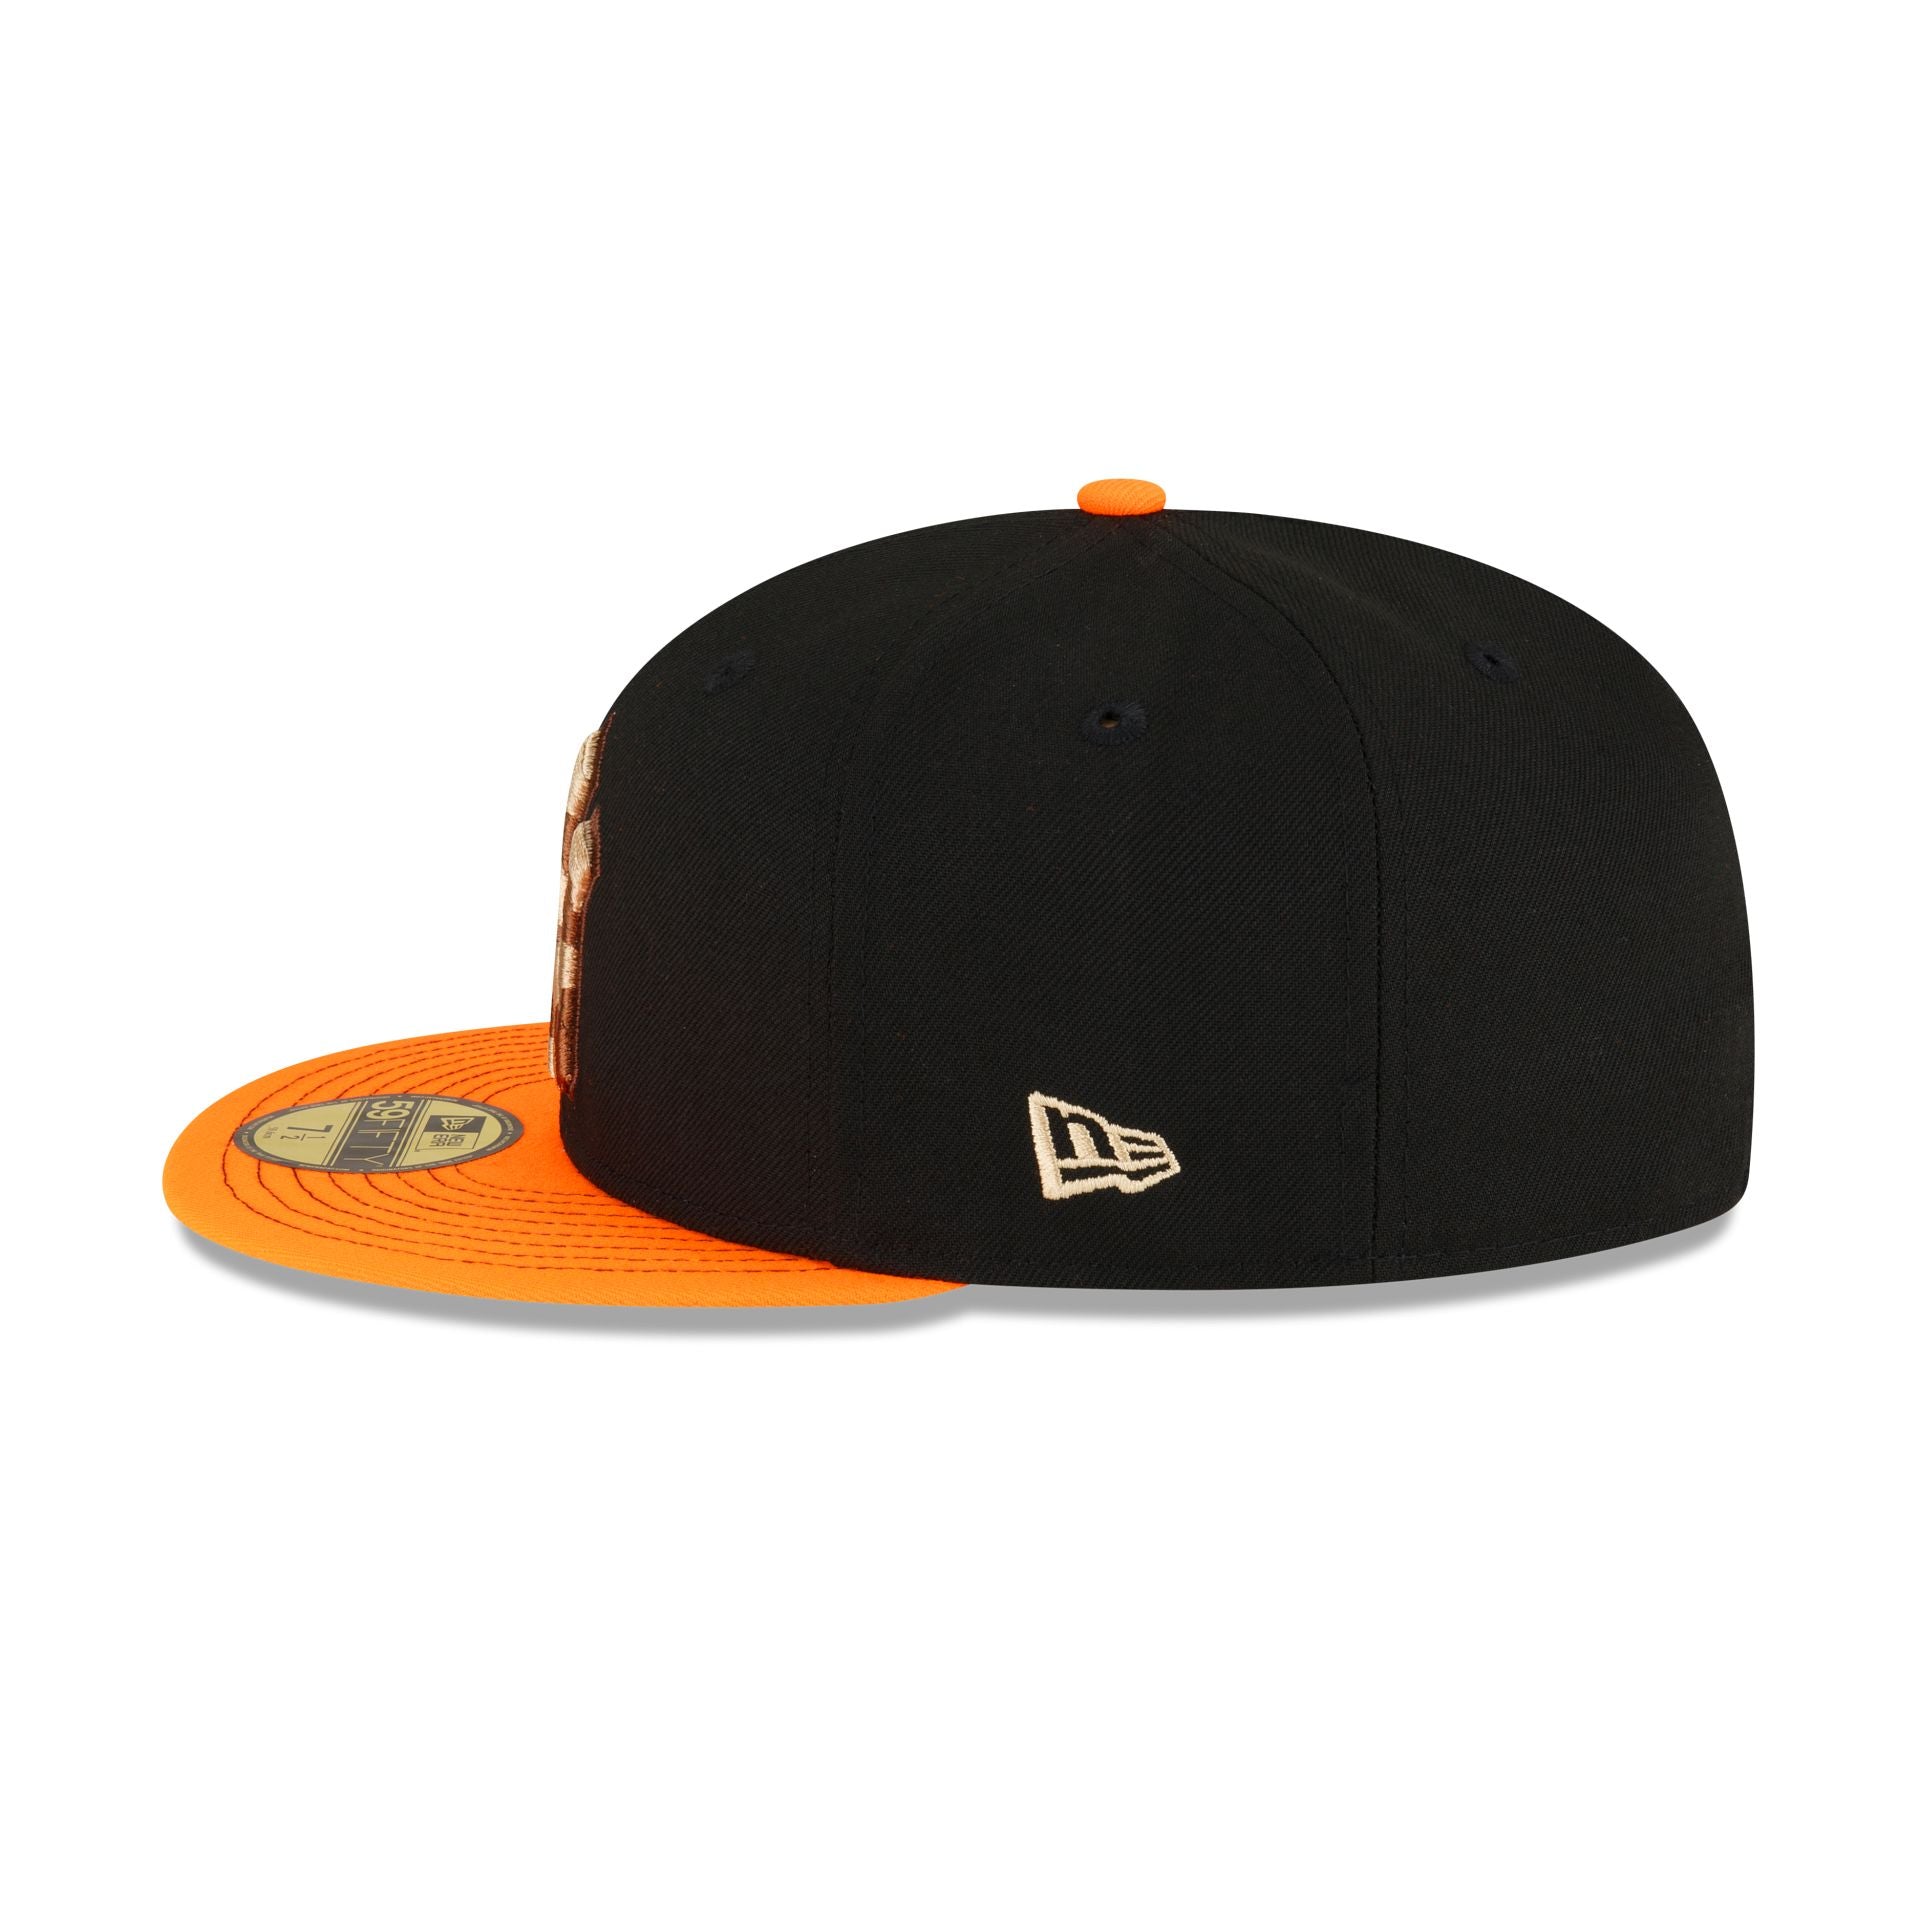 York Cap Just Hat New Yankees Orange – Fitted New Era Caps Visor 59FIFTY